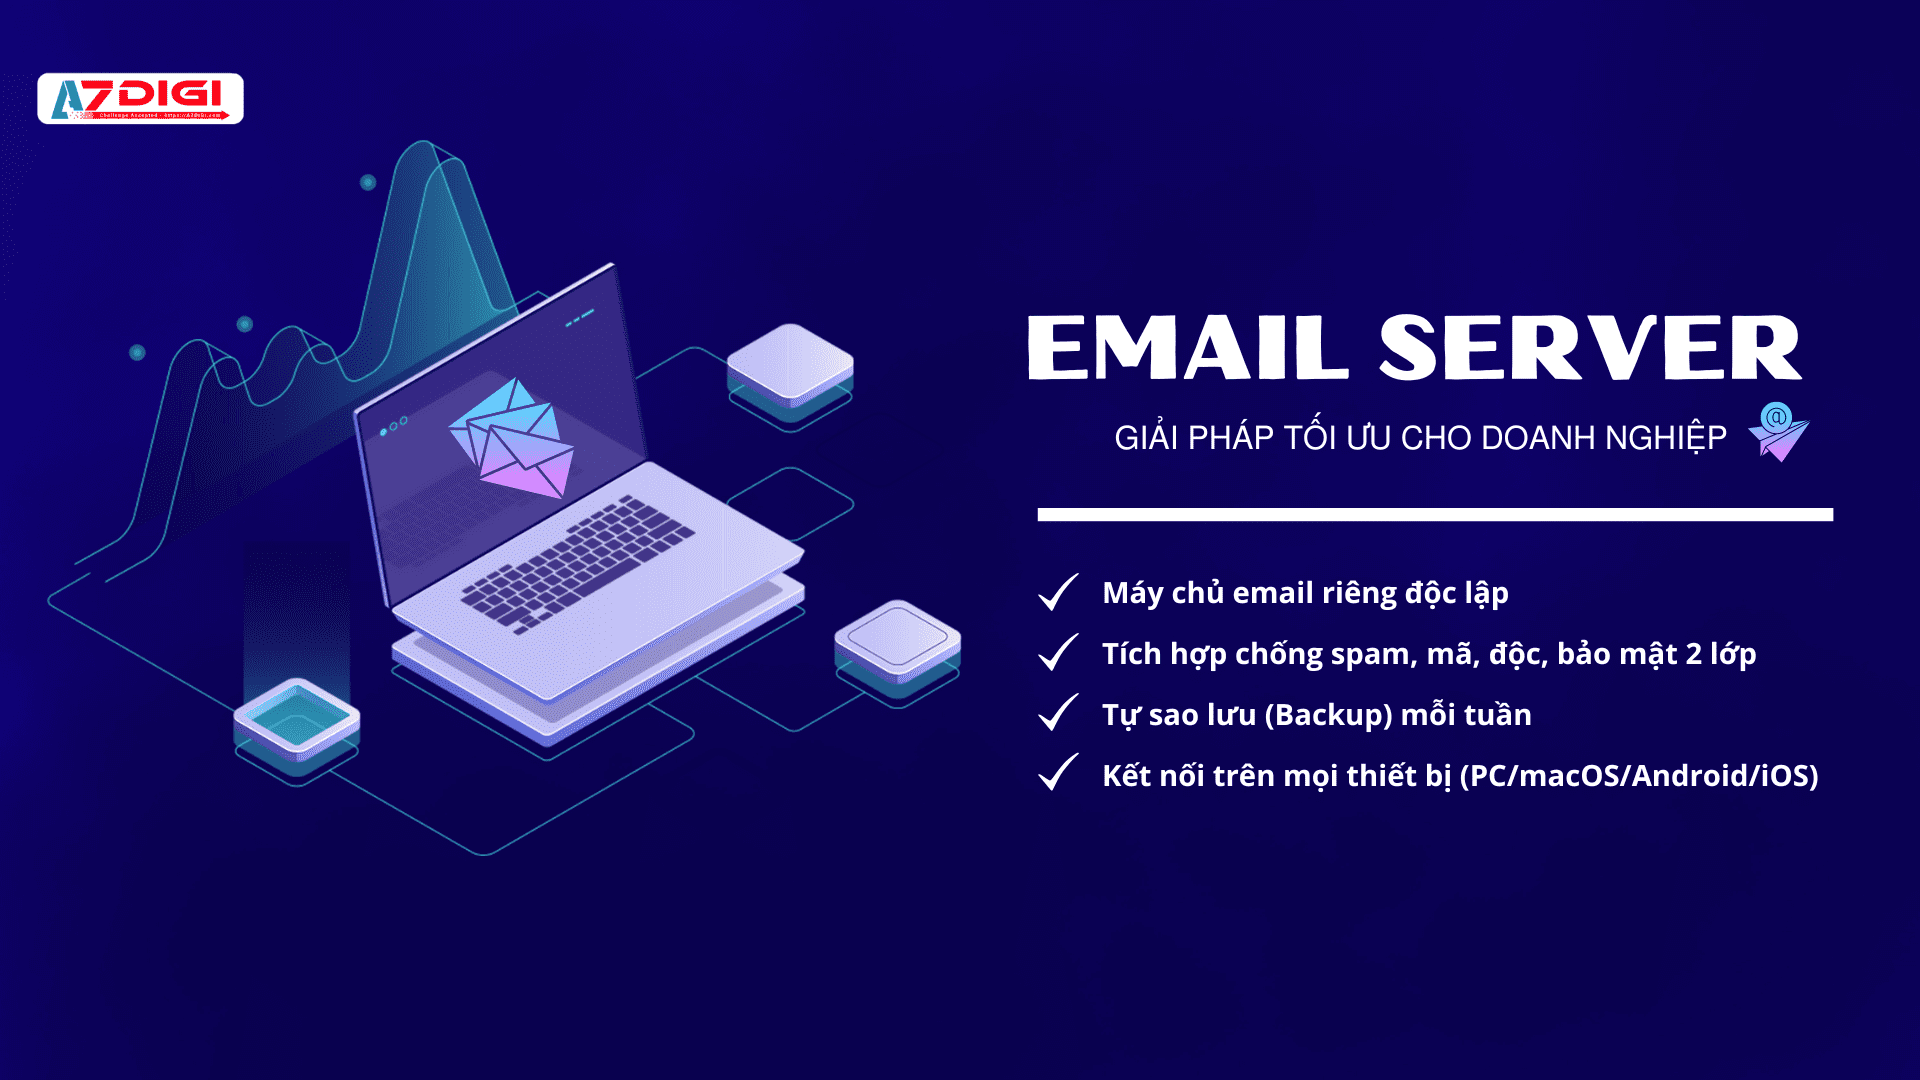 Dịch vụ Email Server tại AZDIGI